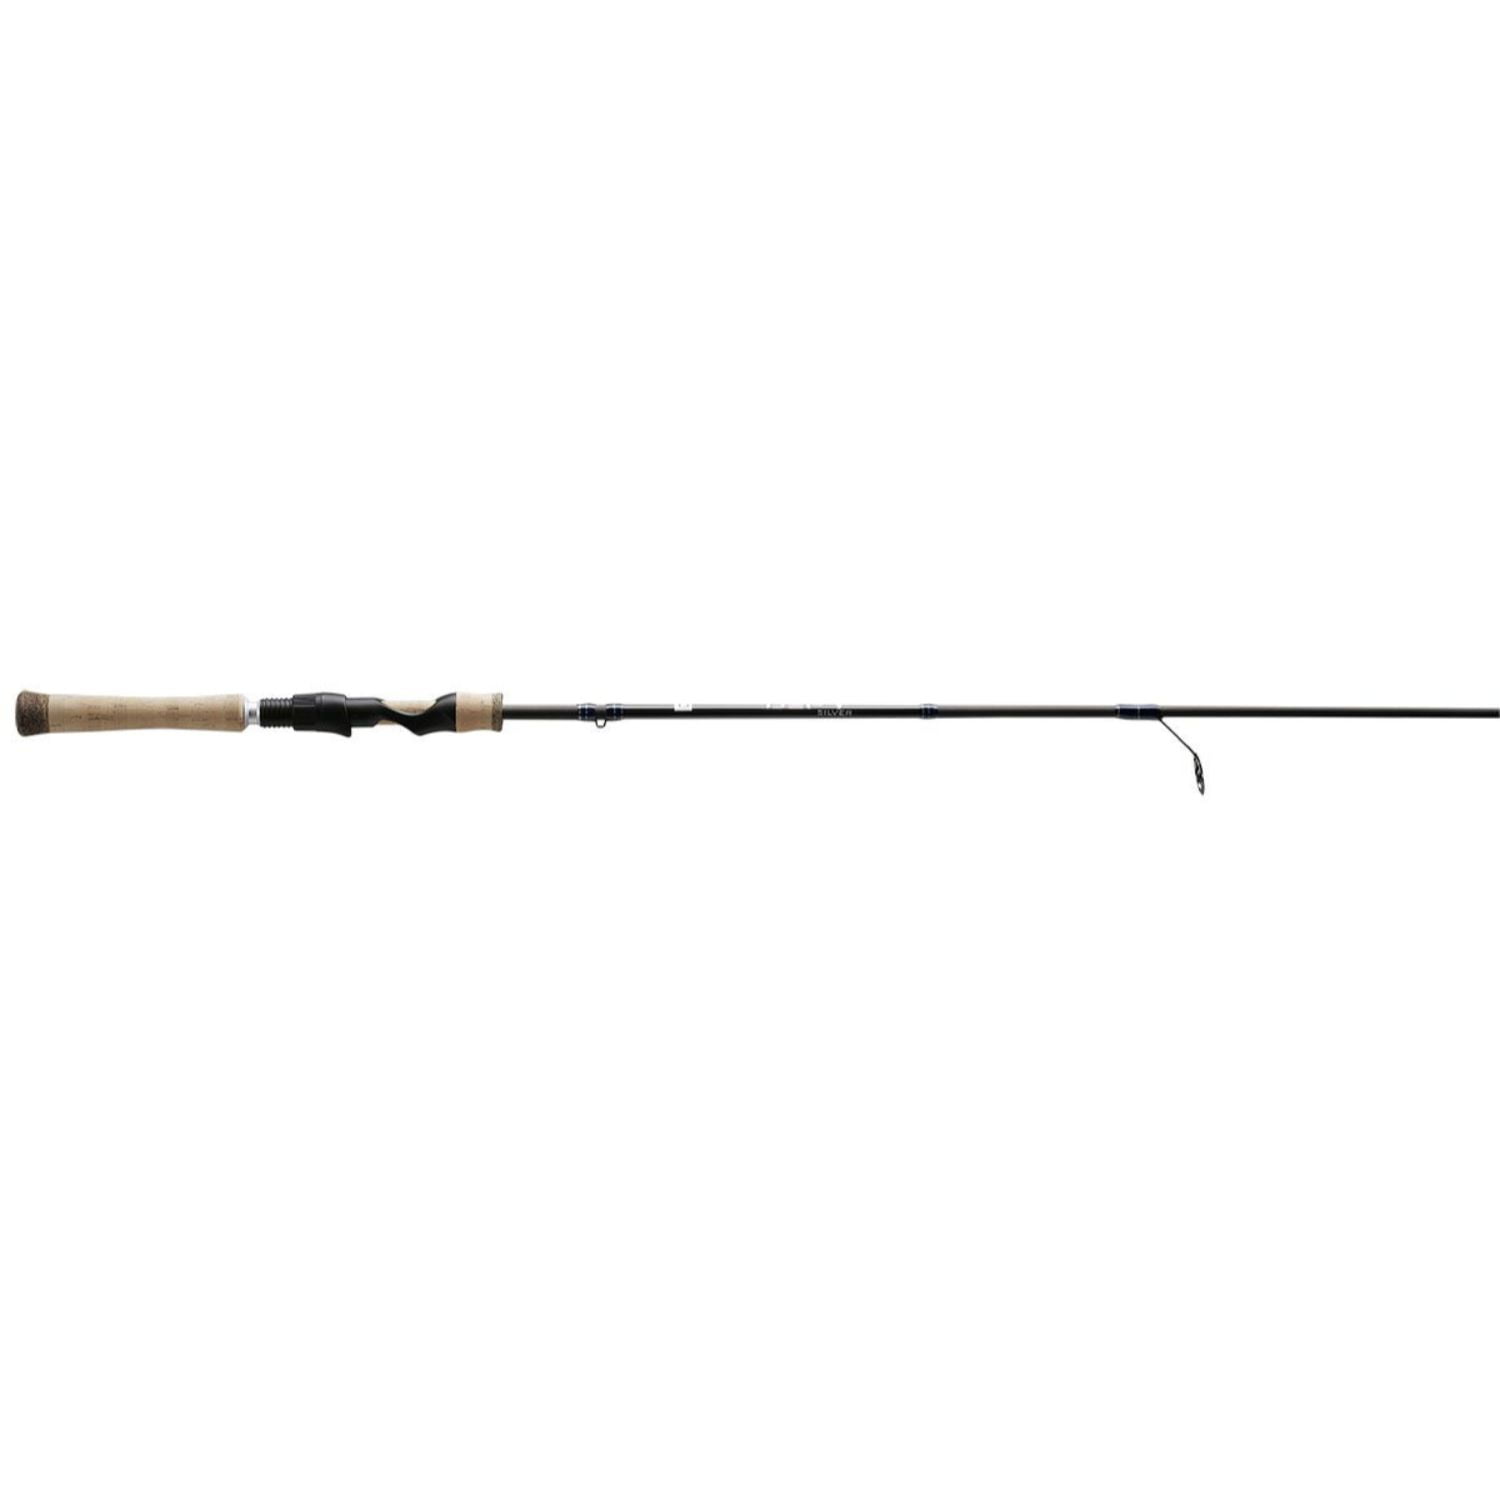 13 FISHING One 3 Defy Silver 6'6" Light Spinning 2-Piece Rod #DEFSS66L-2 